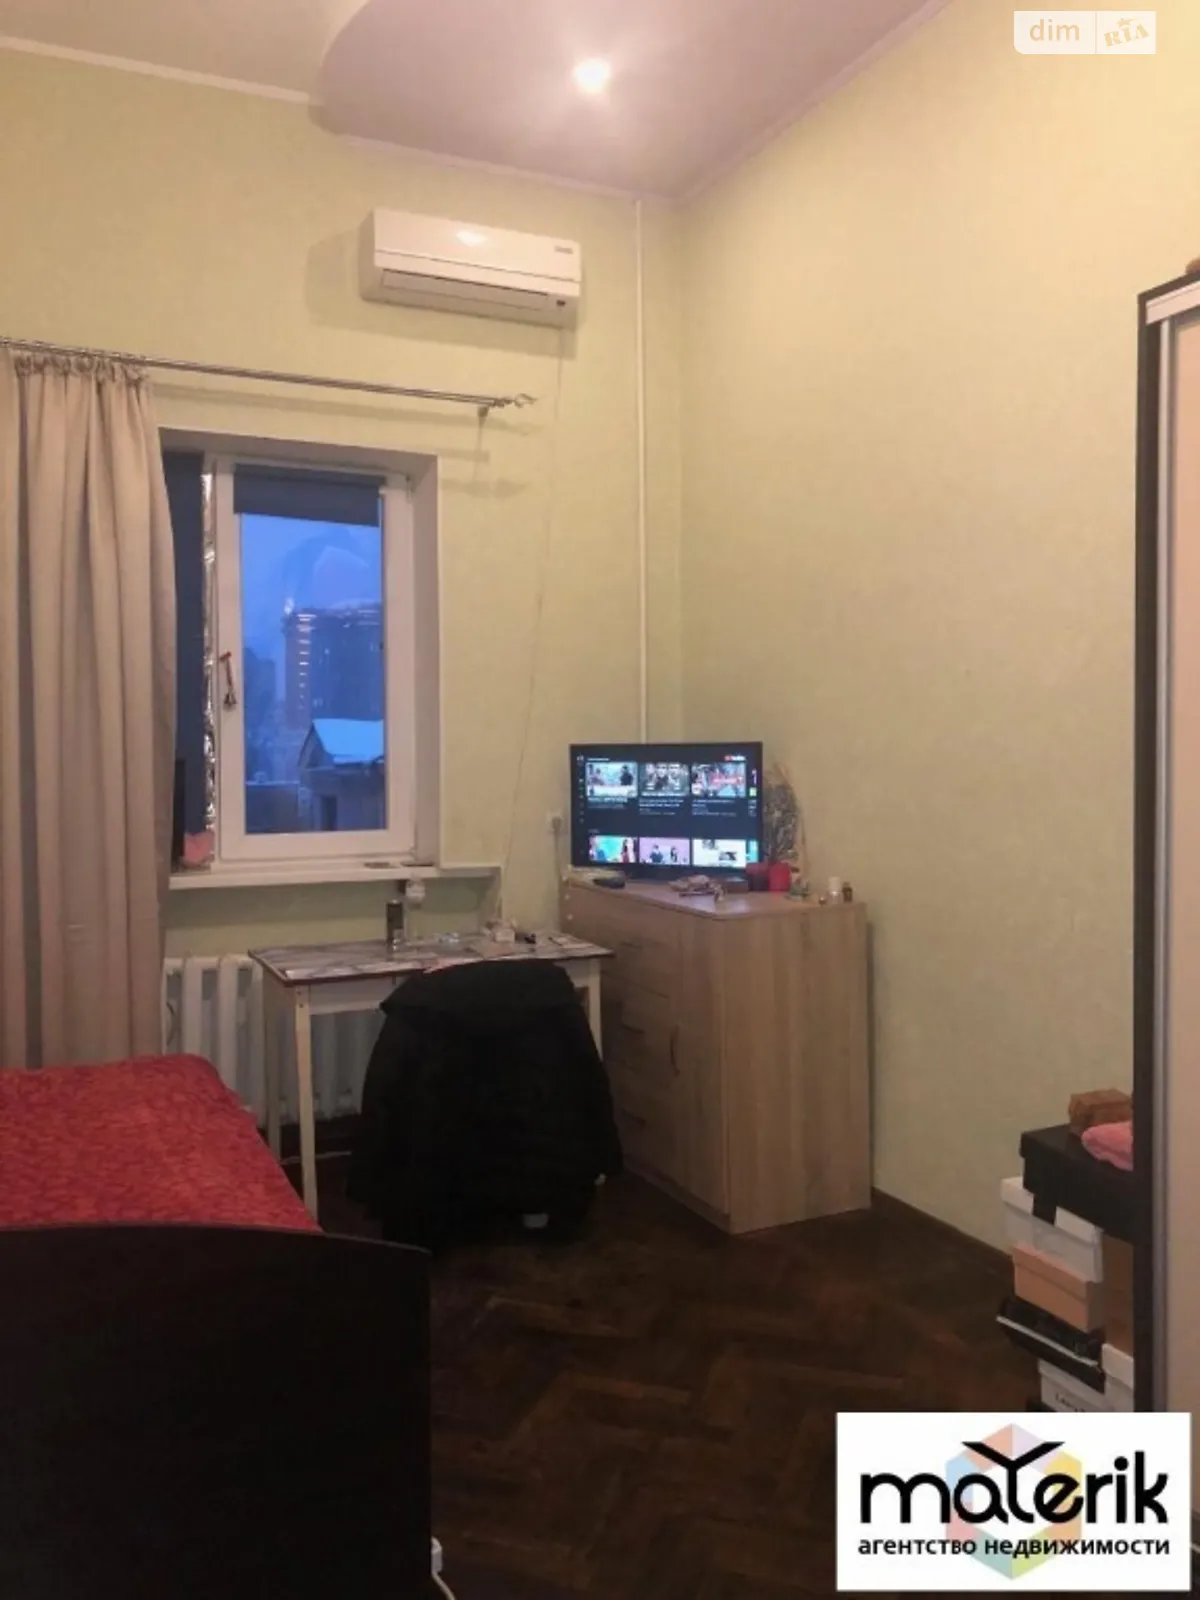 Продается комната 131 кв. м в Одессе, цена: 13000 $ - фото 1